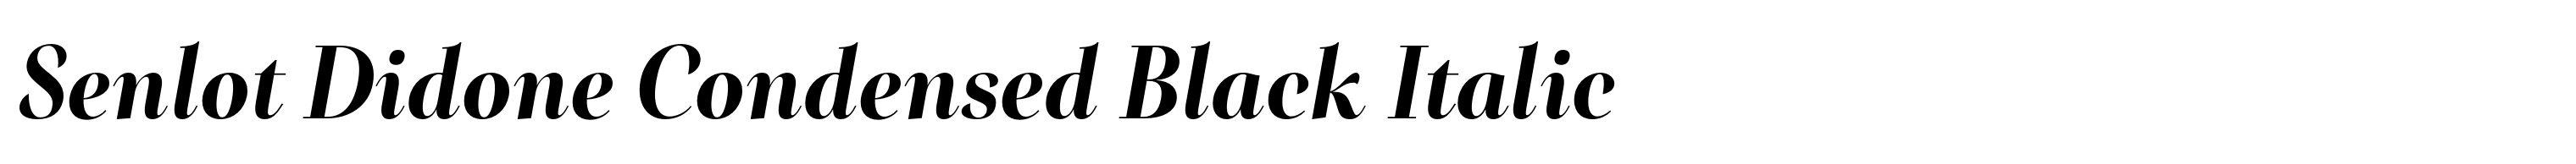 Senlot Didone Condensed Black Italic